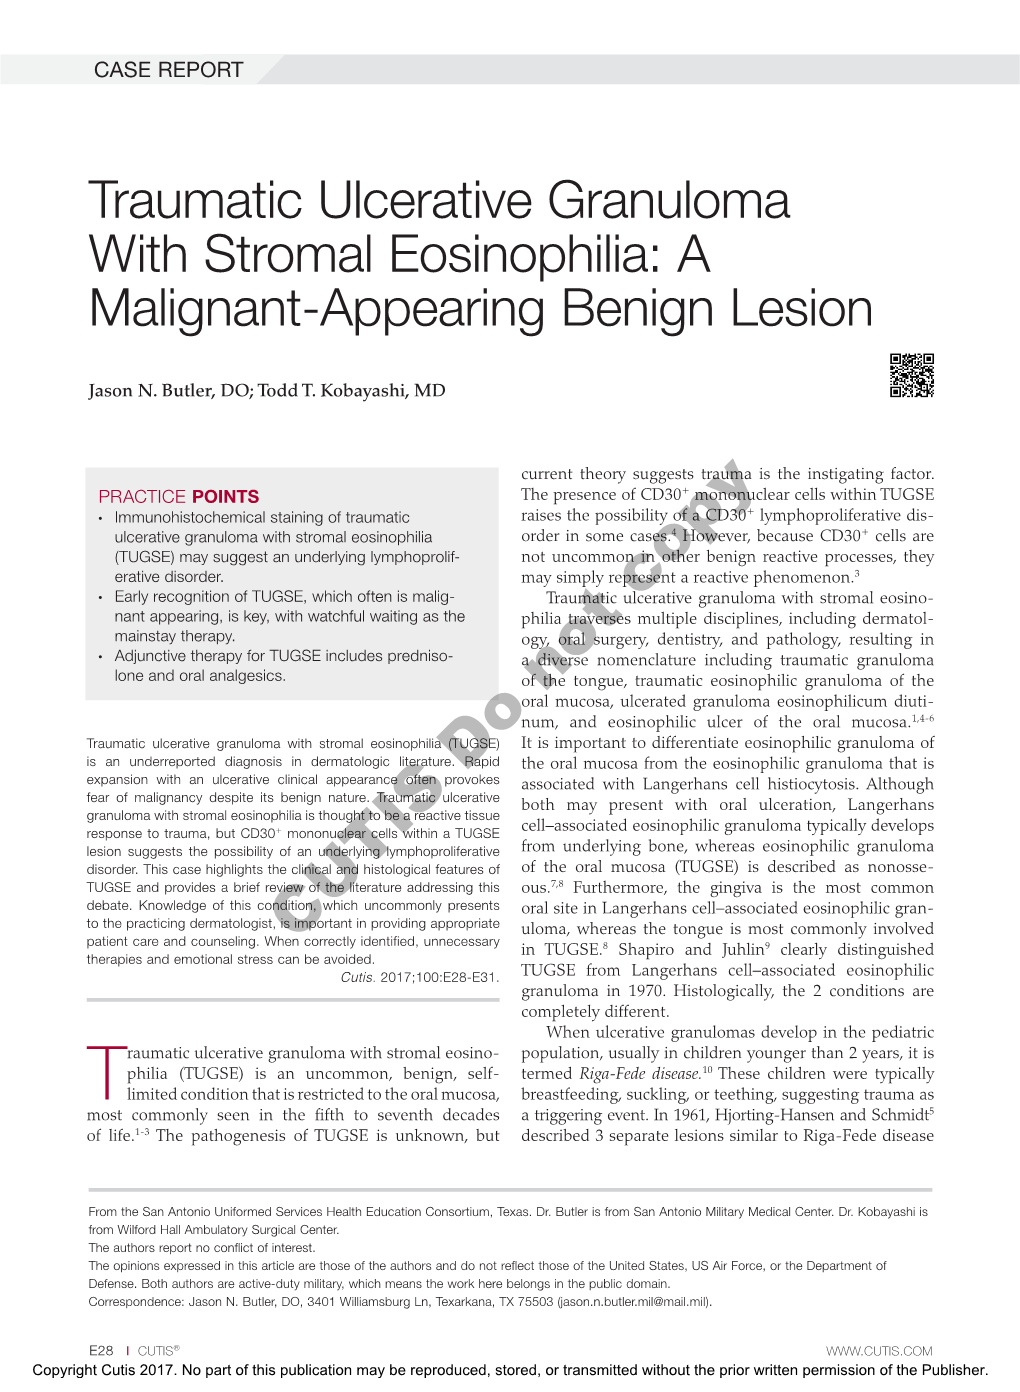 Traumatic Ulcerative Granuloma with Stromal Eosinophilia: a Malignant-Appearing Benign Lesion